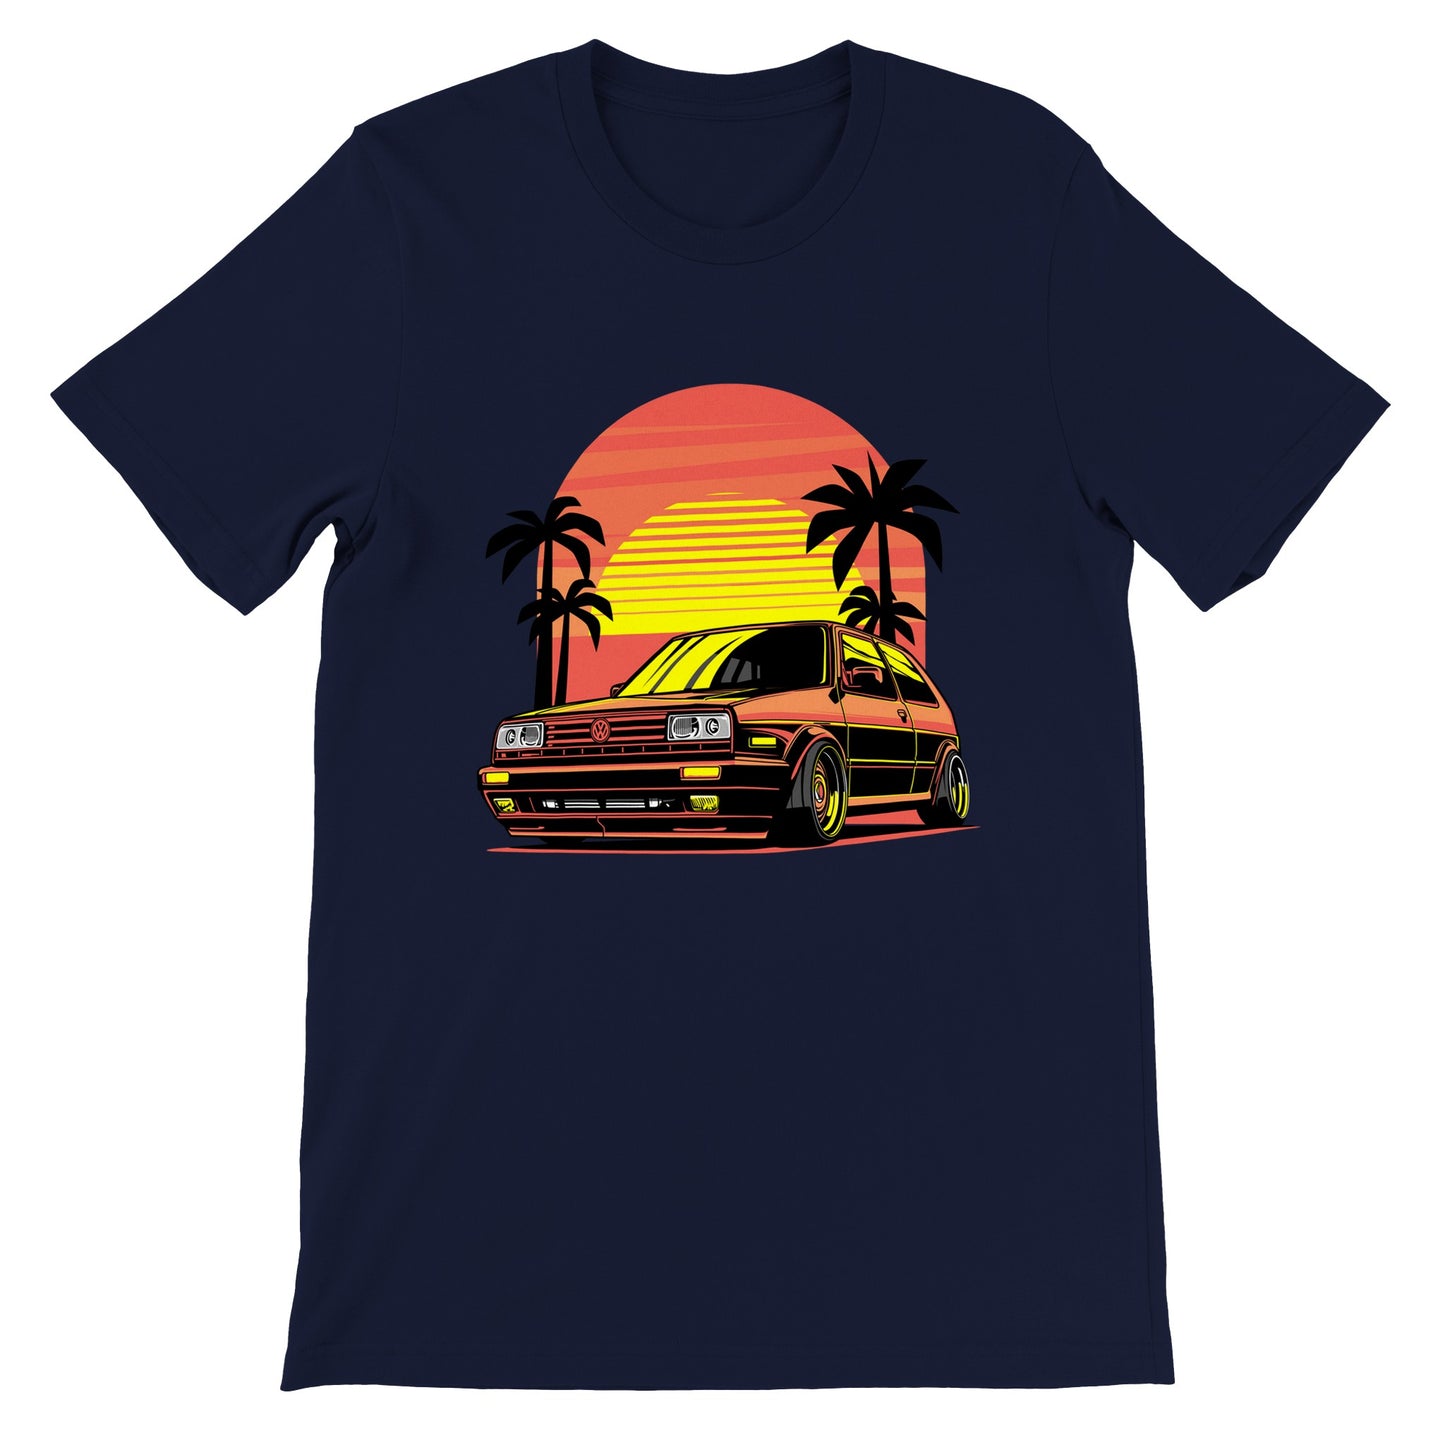 Car T-shirt - VW Golf California Sunset Artwork - Premium Unisex T-shirt